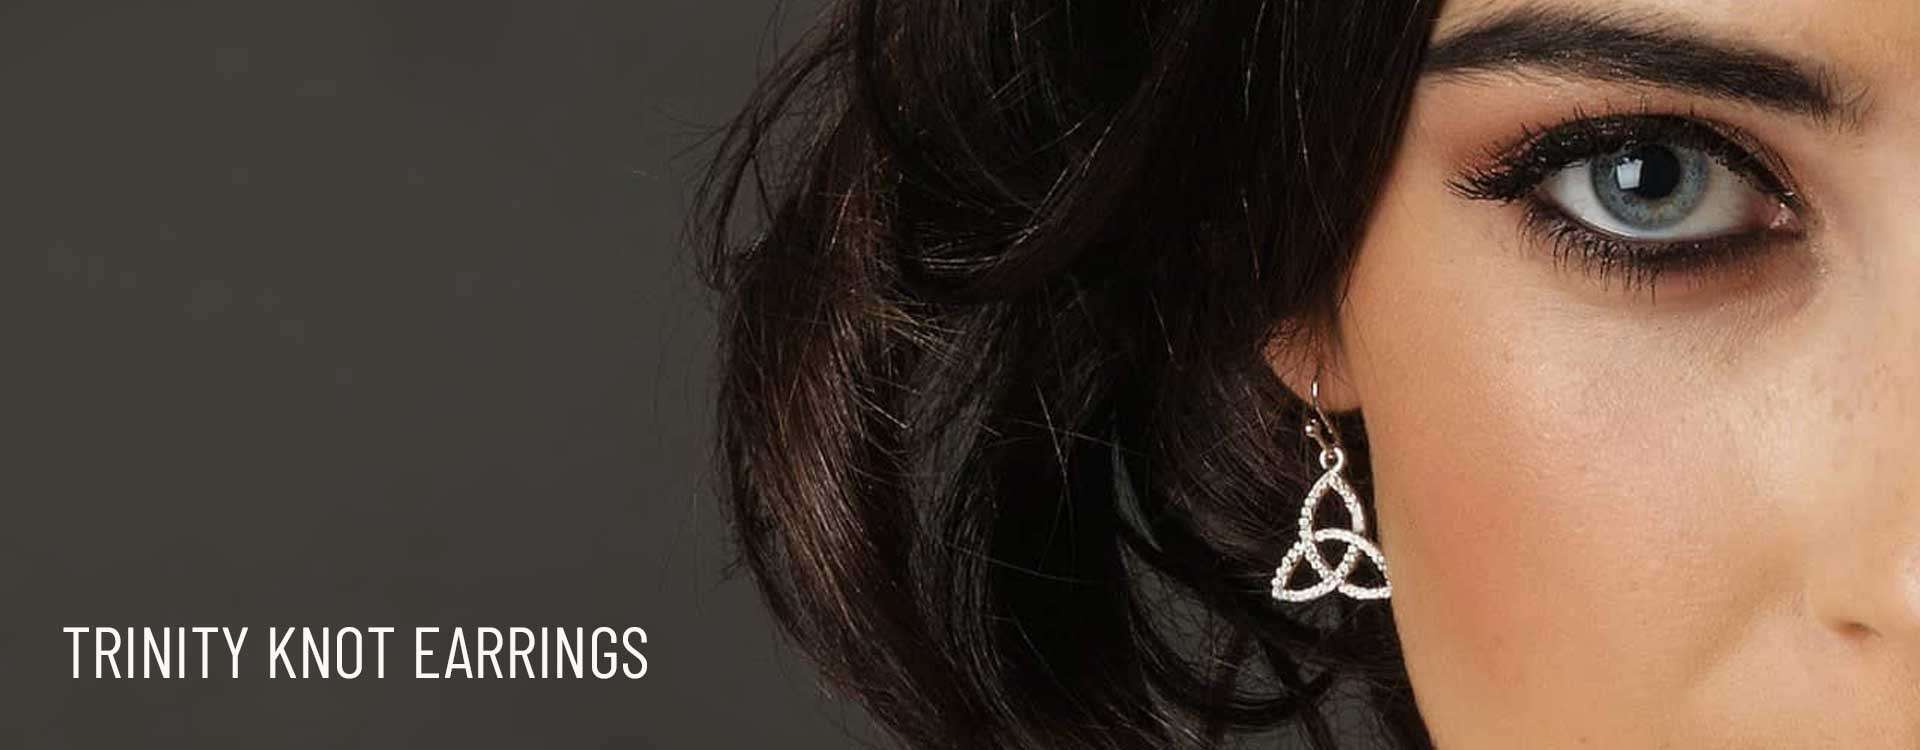 Produkt-Highlight: Trinity-Knoten-Ohrringe mit Kristallen